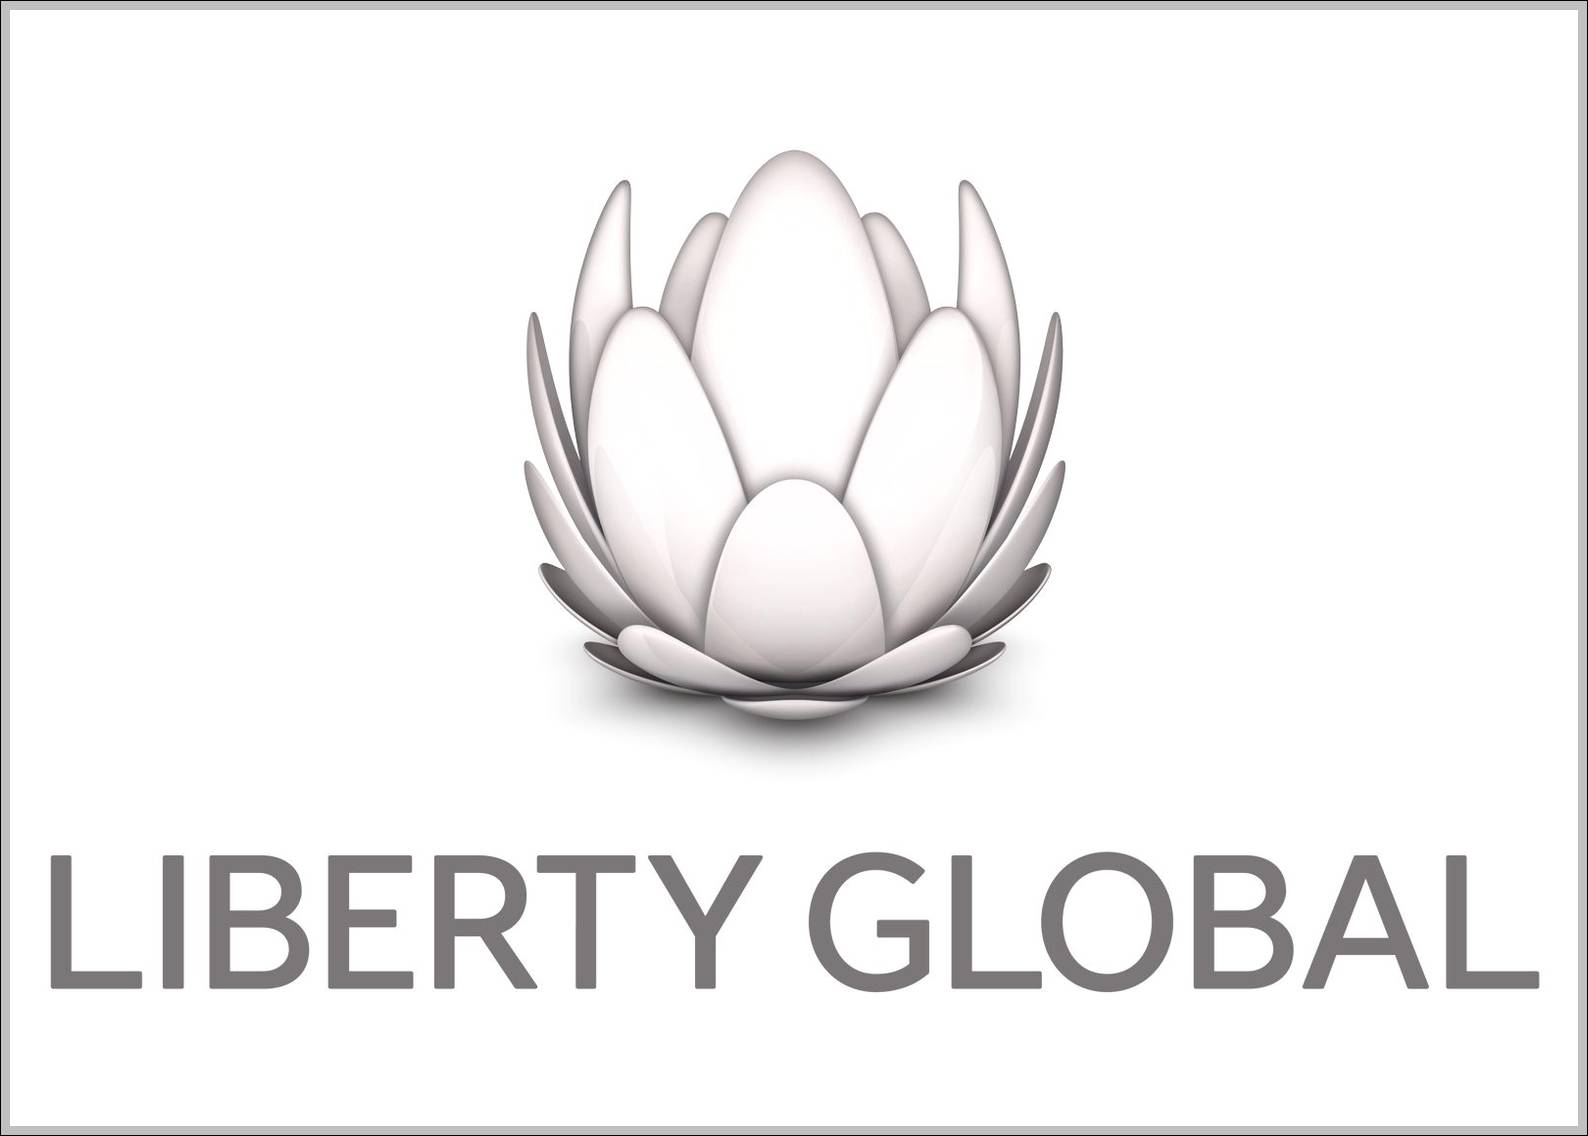 Liberty Global logo master